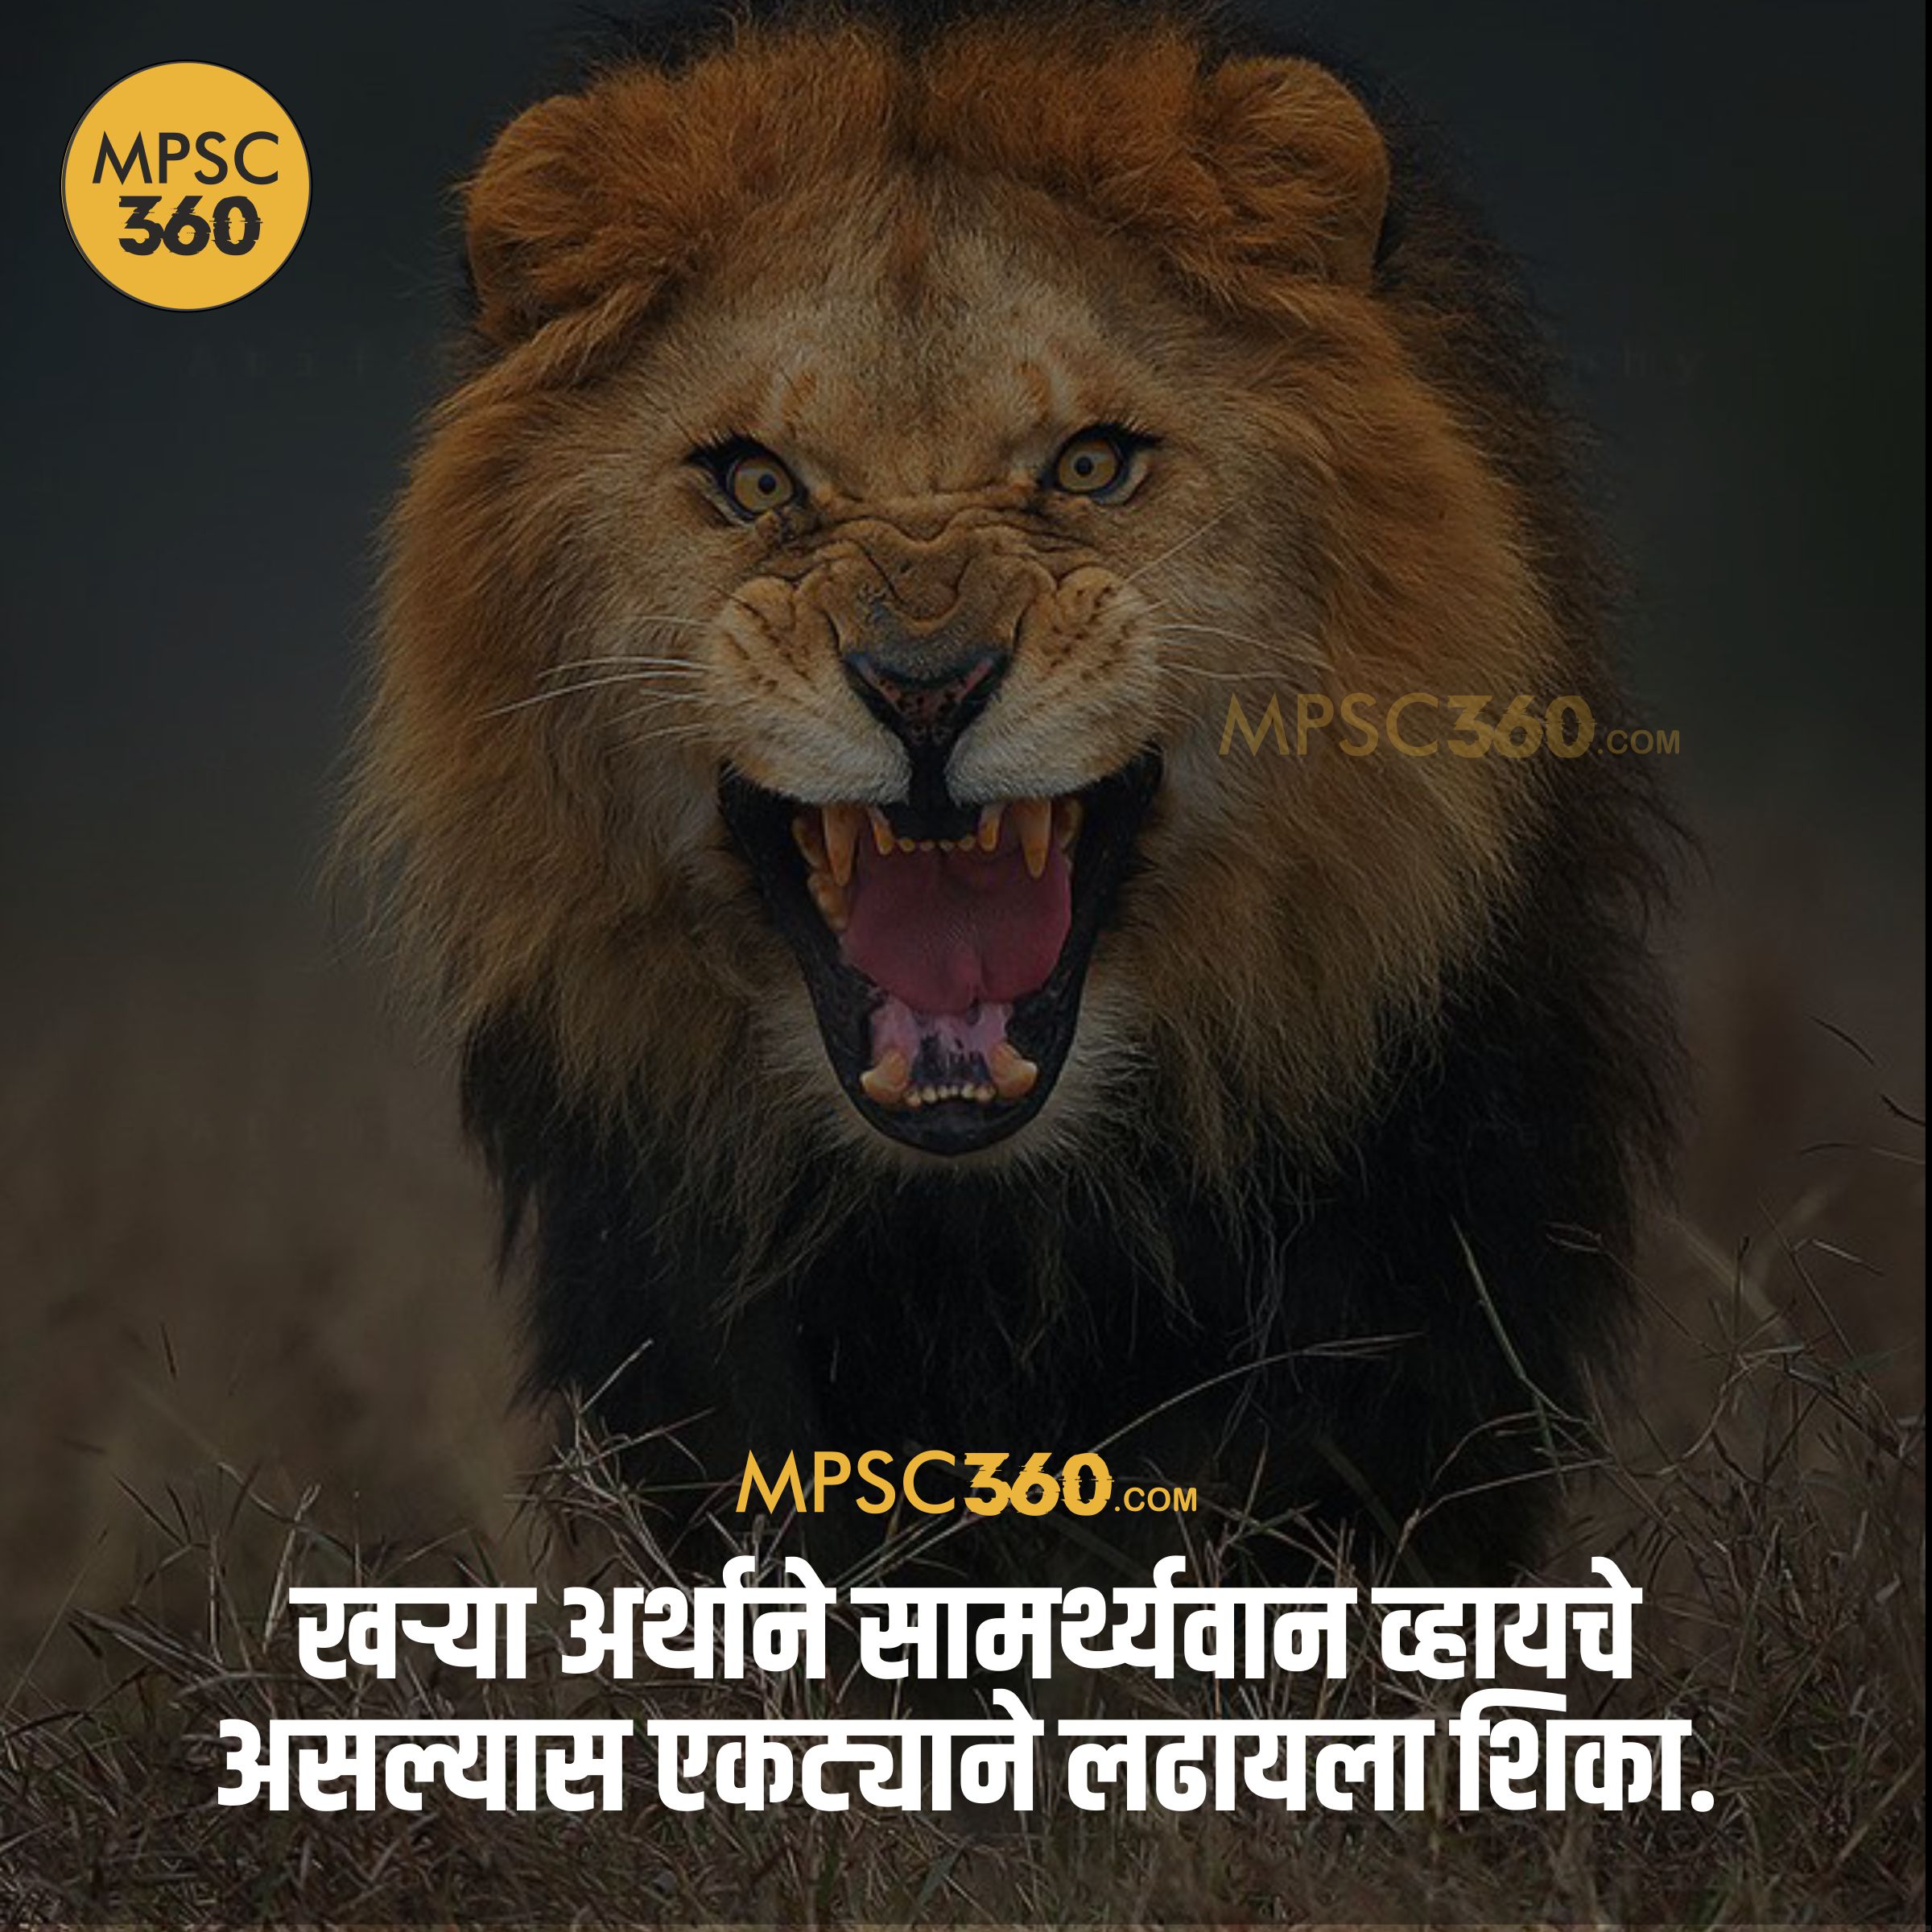 Marathi Motivational Quotes Images - MPSC 360